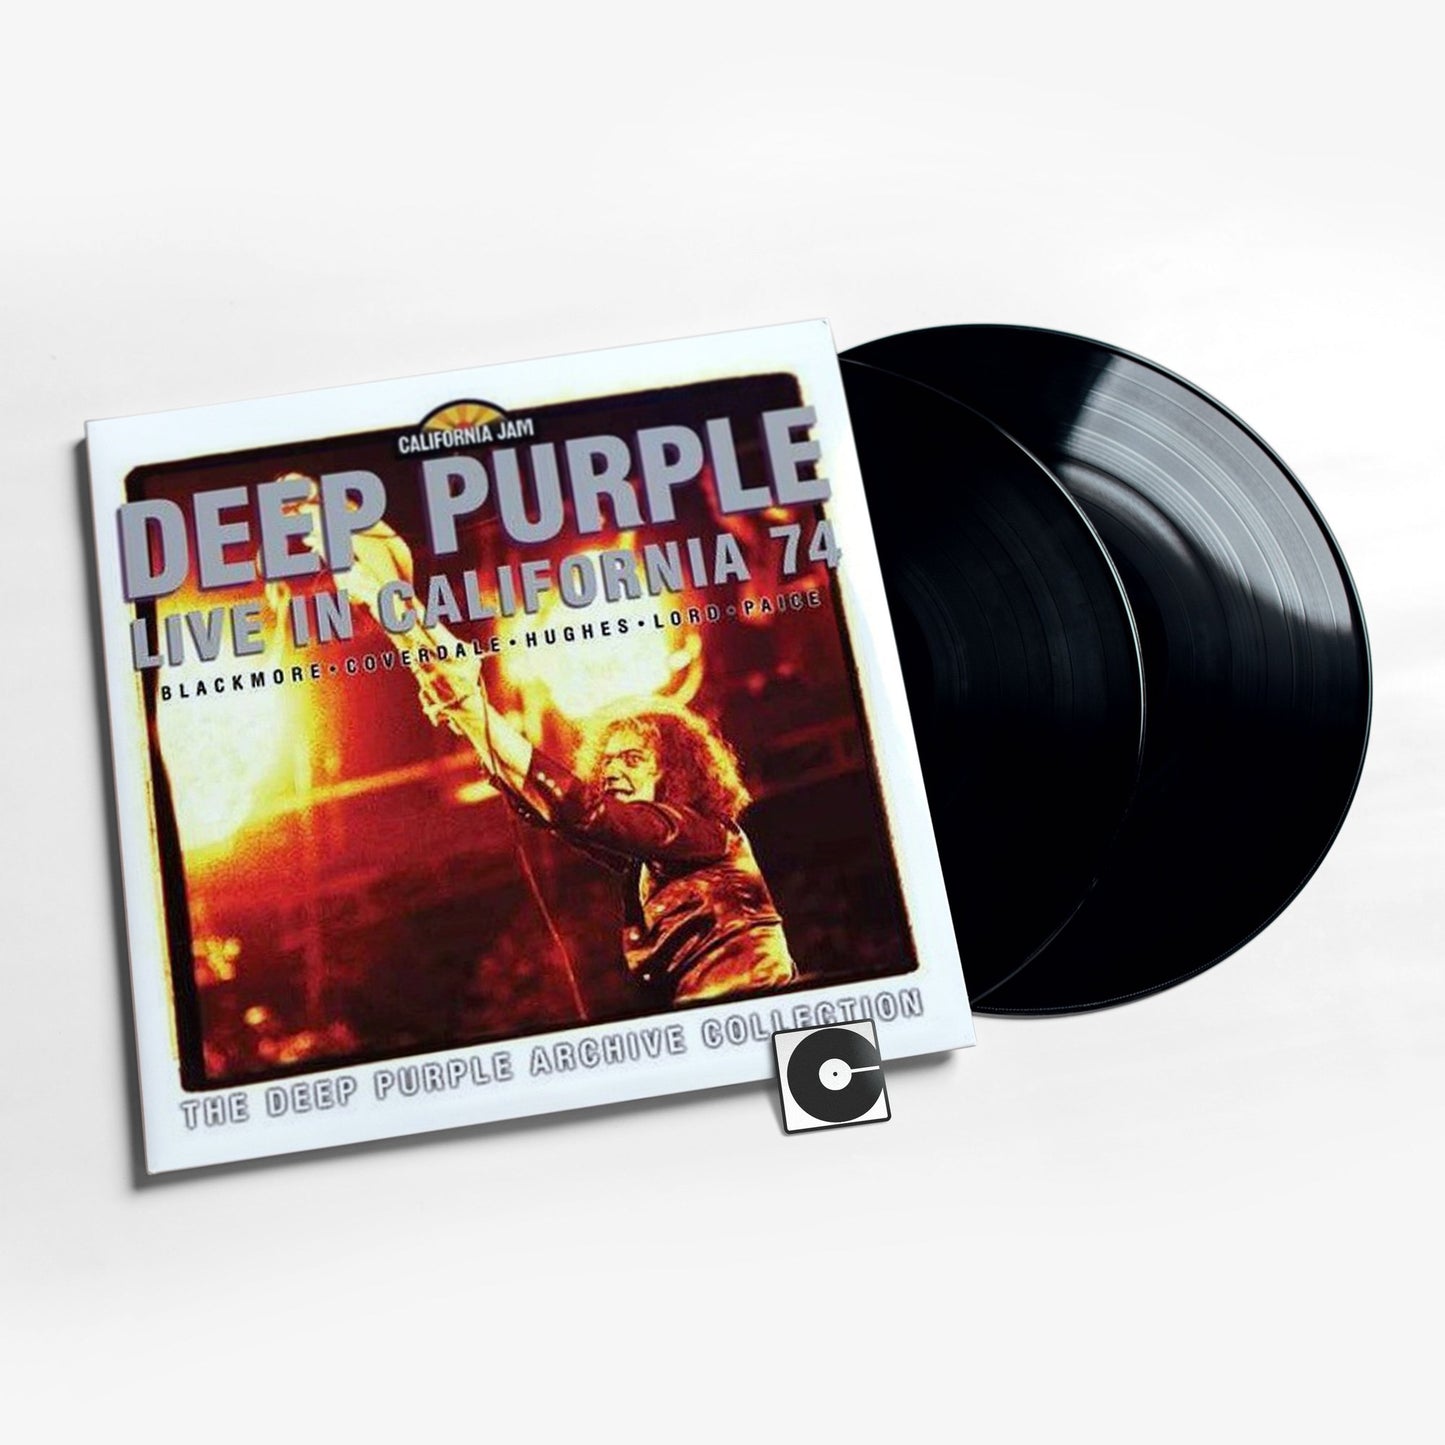 Deep Purple - "Live In California '74"